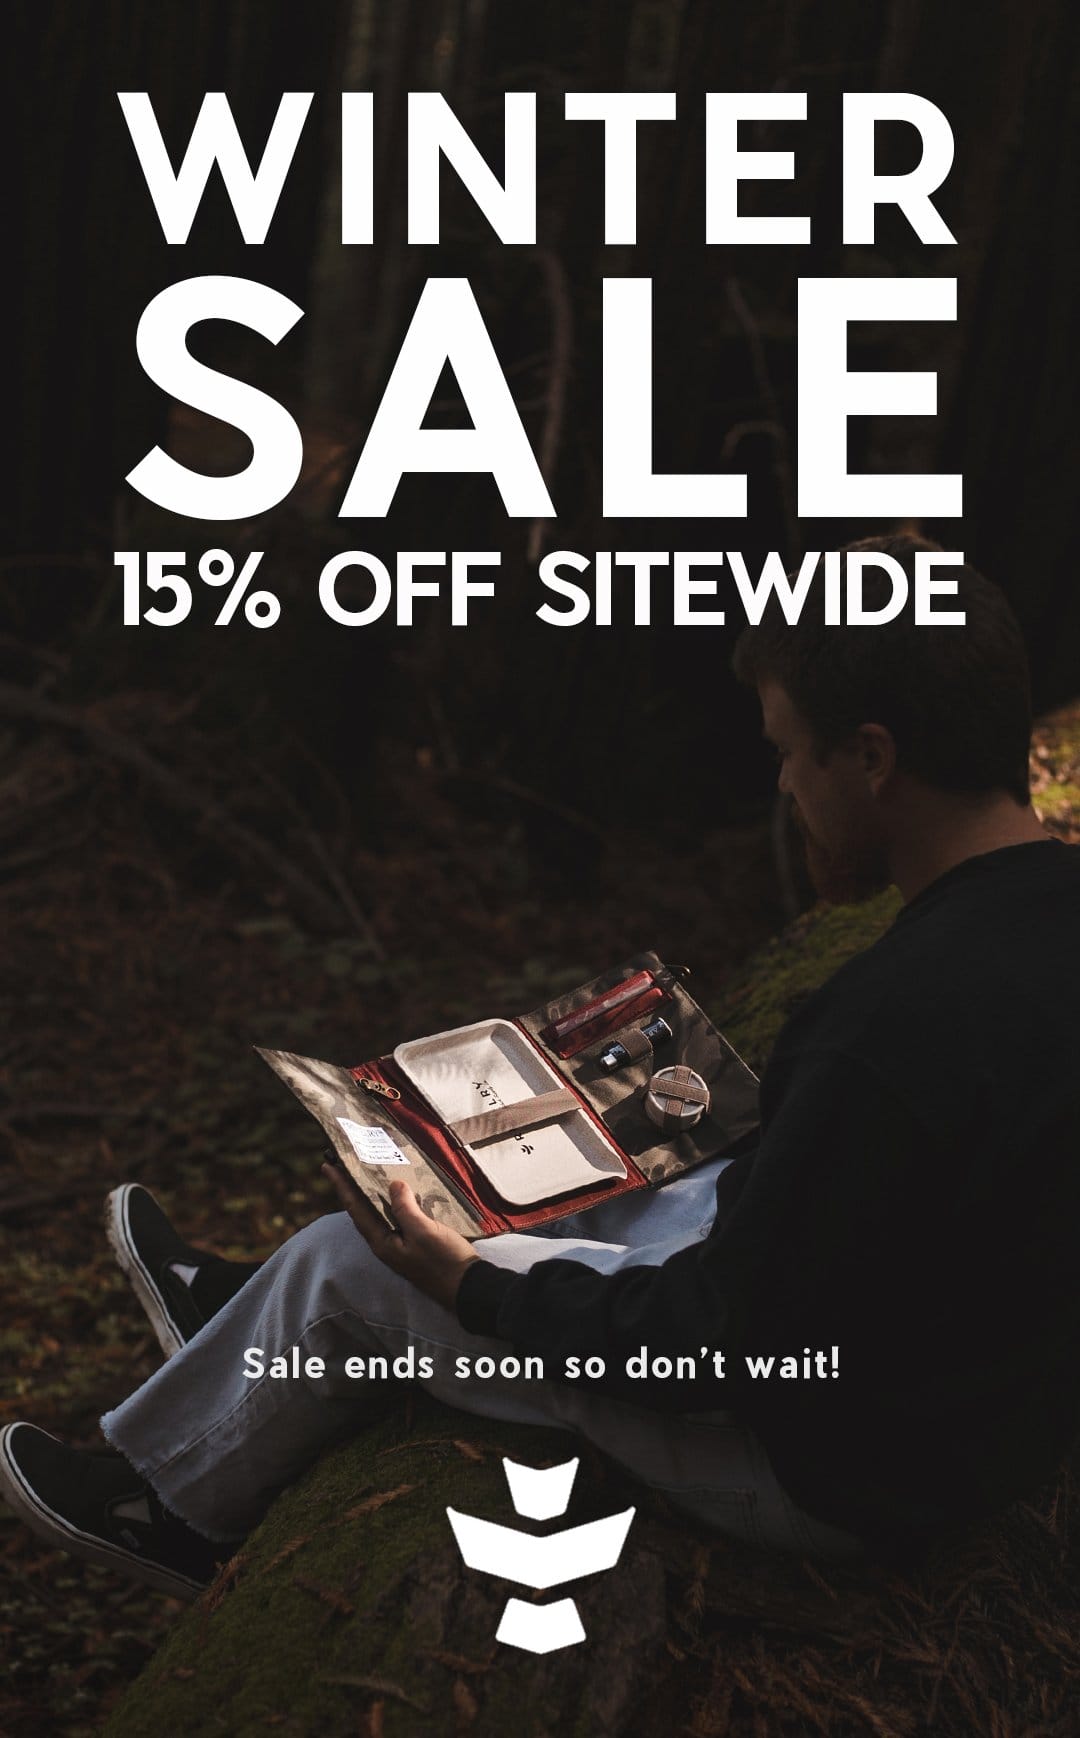 WINTER SALE 15% OFF SITEWIDE Sale ends soon so don't wait!